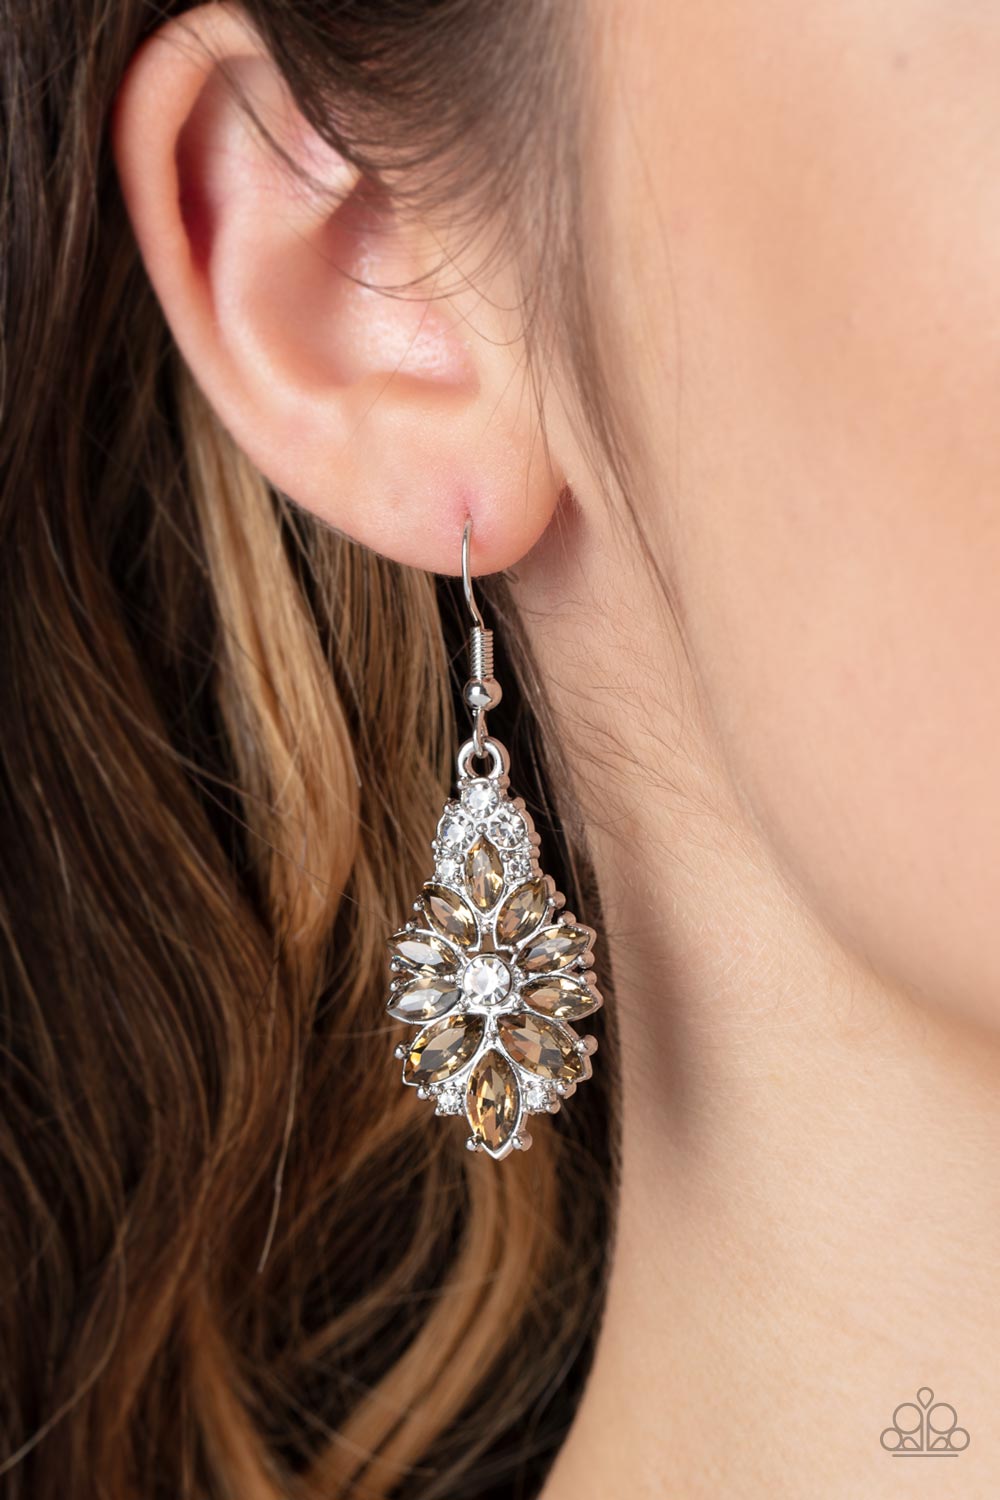 Gala Goddess Brown Rhinestone Earrings - Paparazzi Accessories- lightbox - CarasShop.com - $5 Jewelry by Cara Jewels